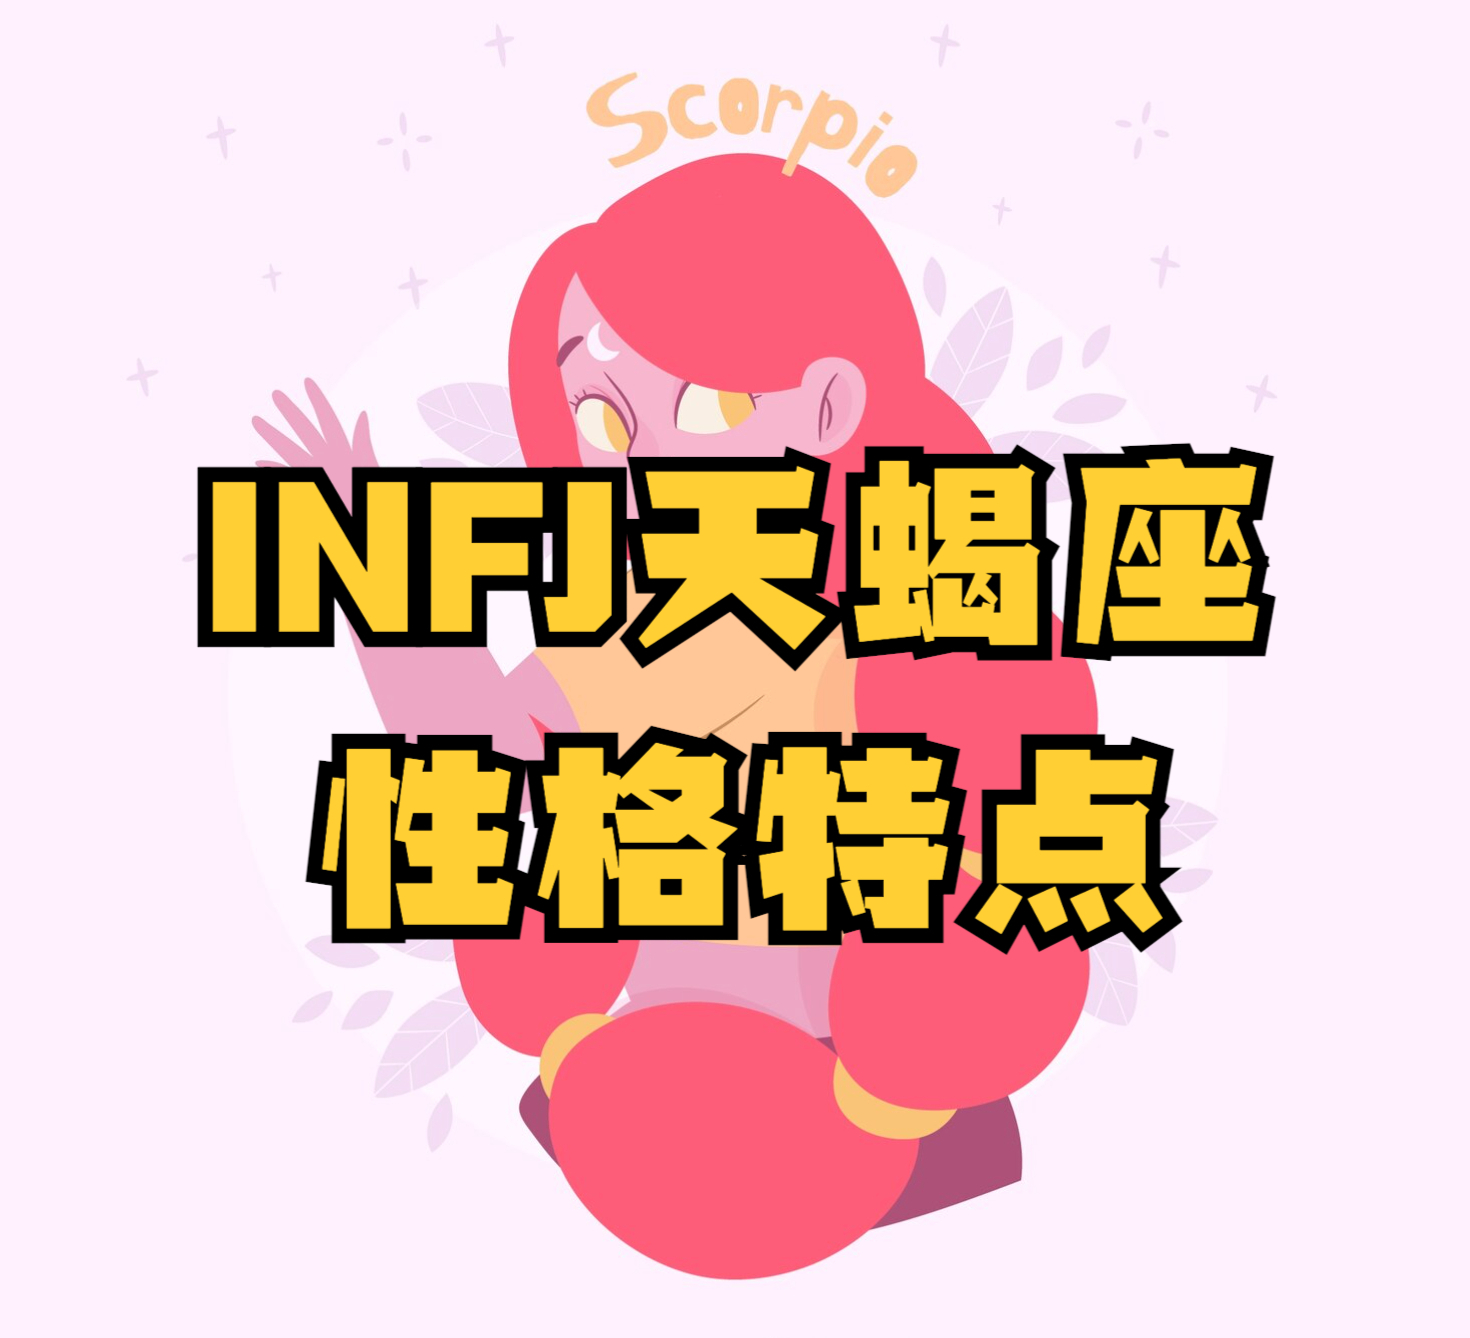 MBTI and horoscope: professional analysis of INFJ Scorpio personality type